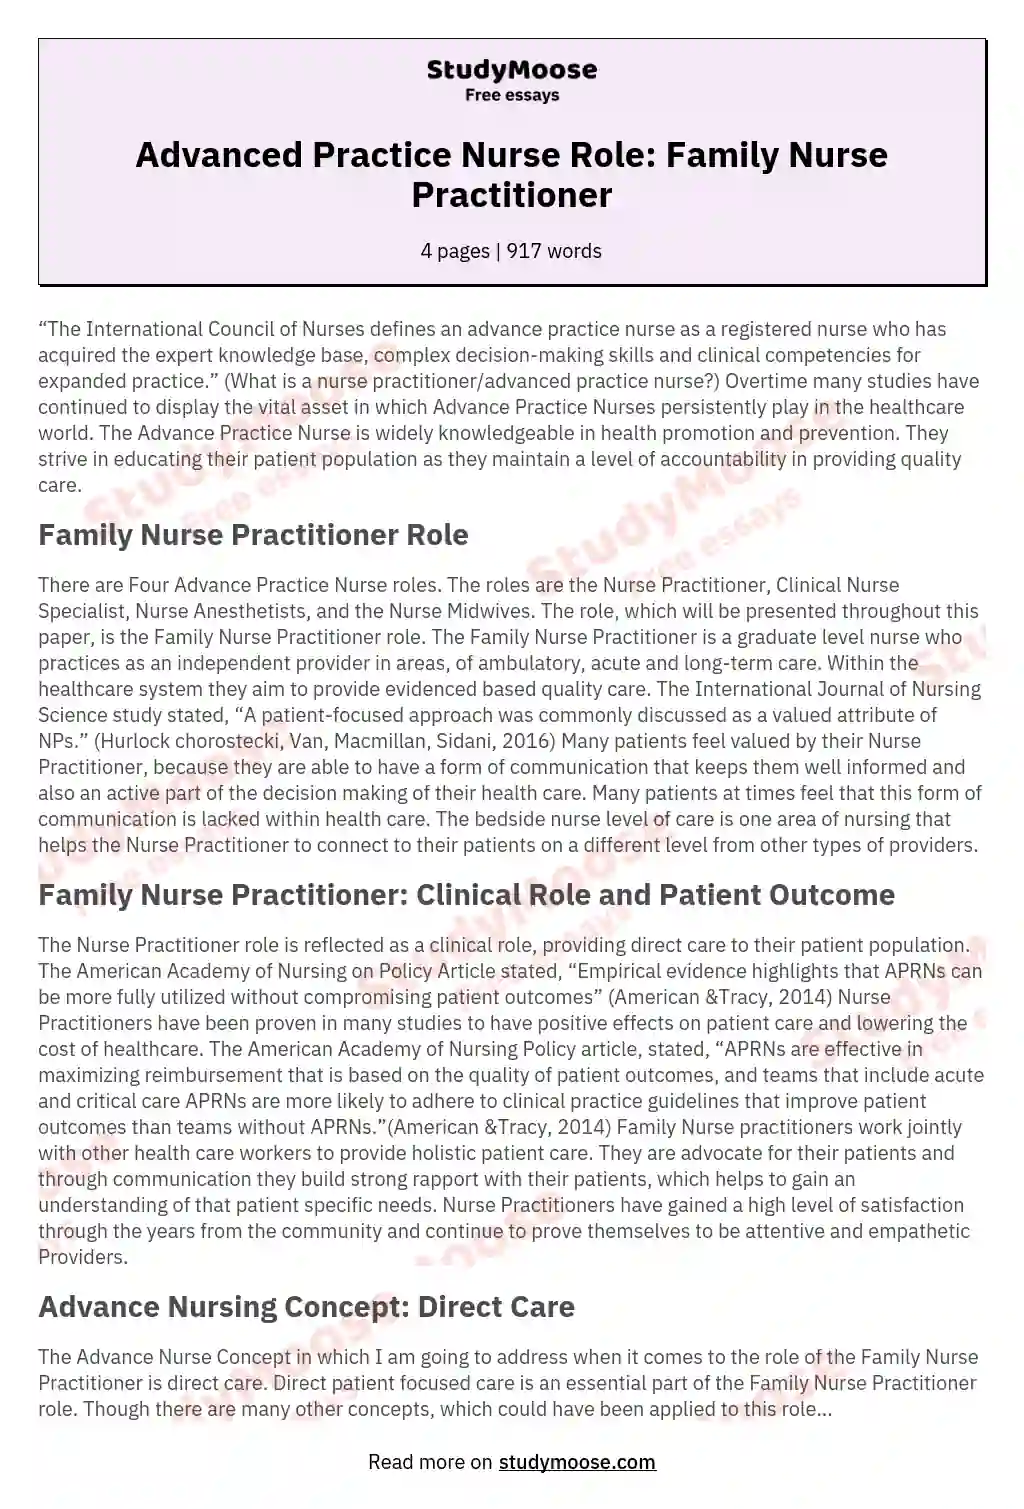 Advanced Practice Nurse Role: Family Nurse Practitioner